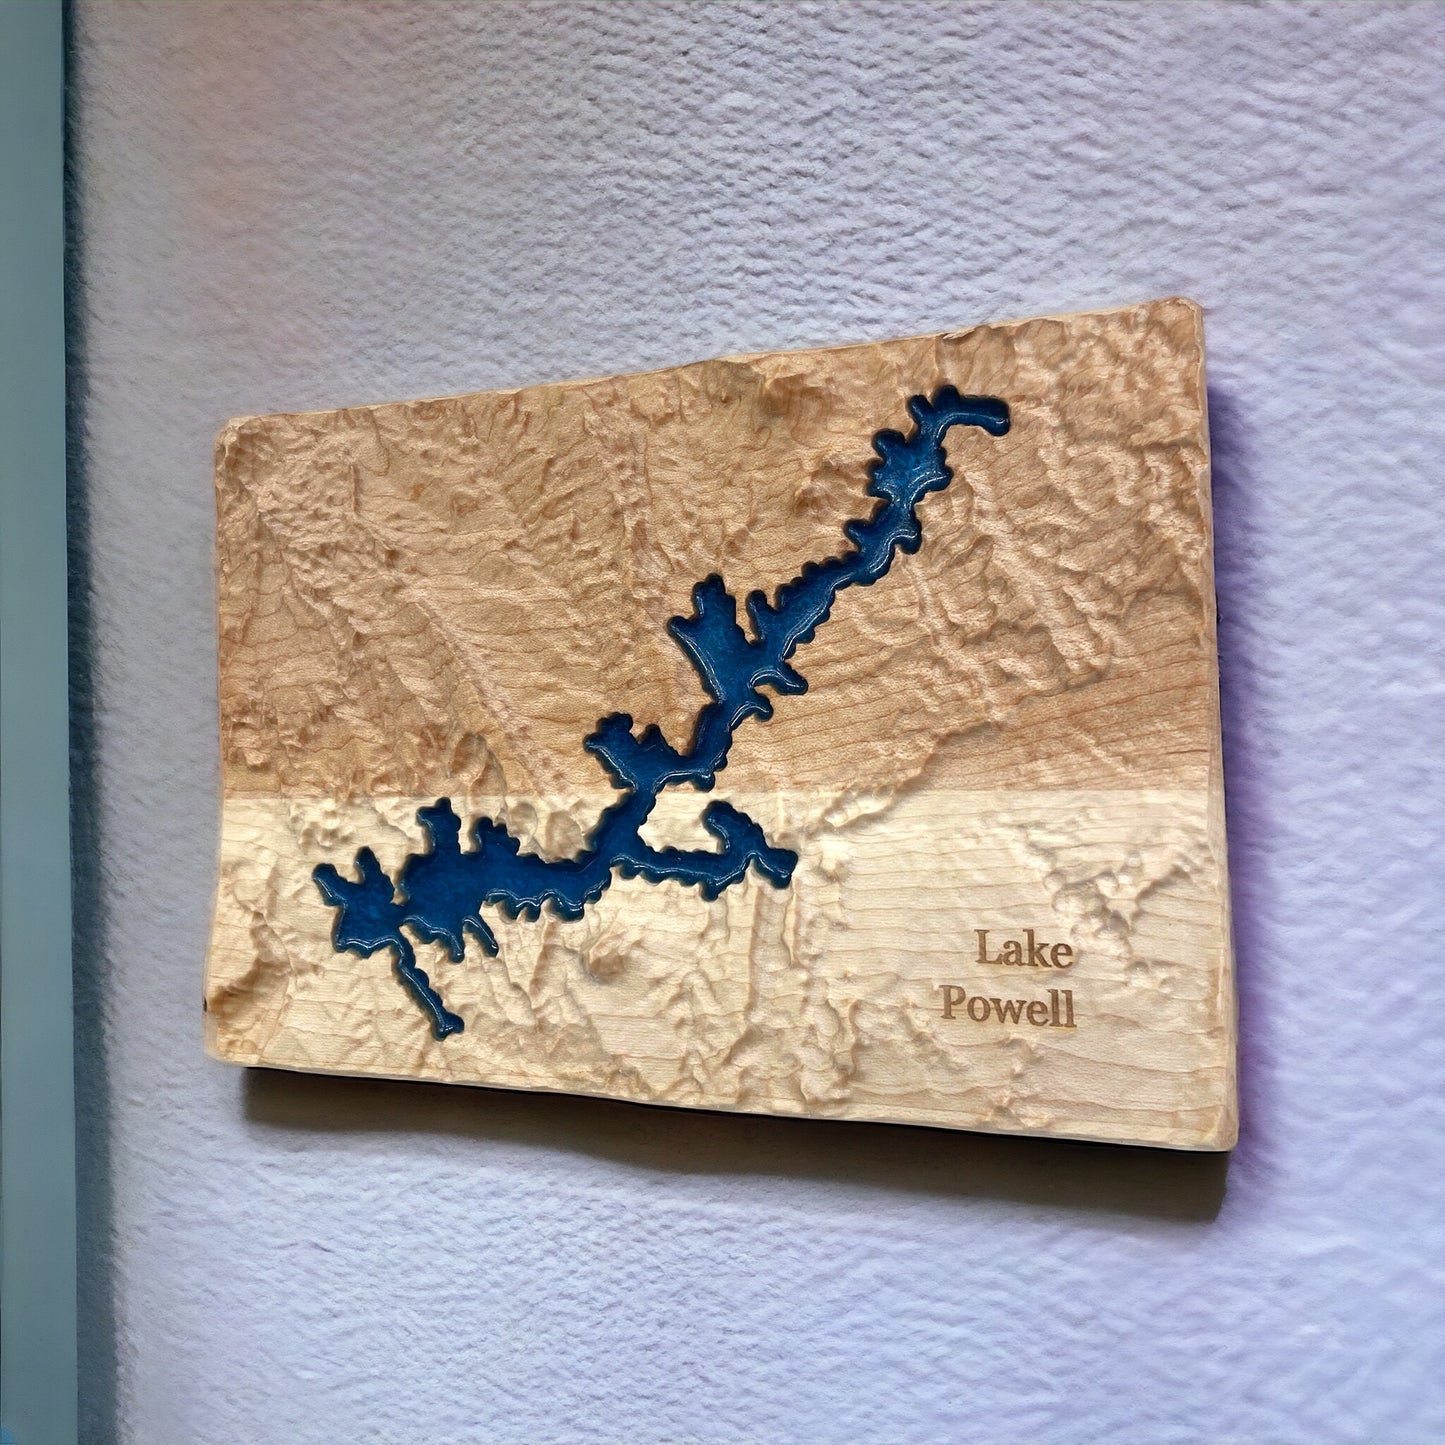 Lake Powell 3D Relief Map | Lake Powell Wood Epoxy Art | Lake Powell Reservoir Arizona | Travel Gift | Gift for Him | Lake Powell Gift